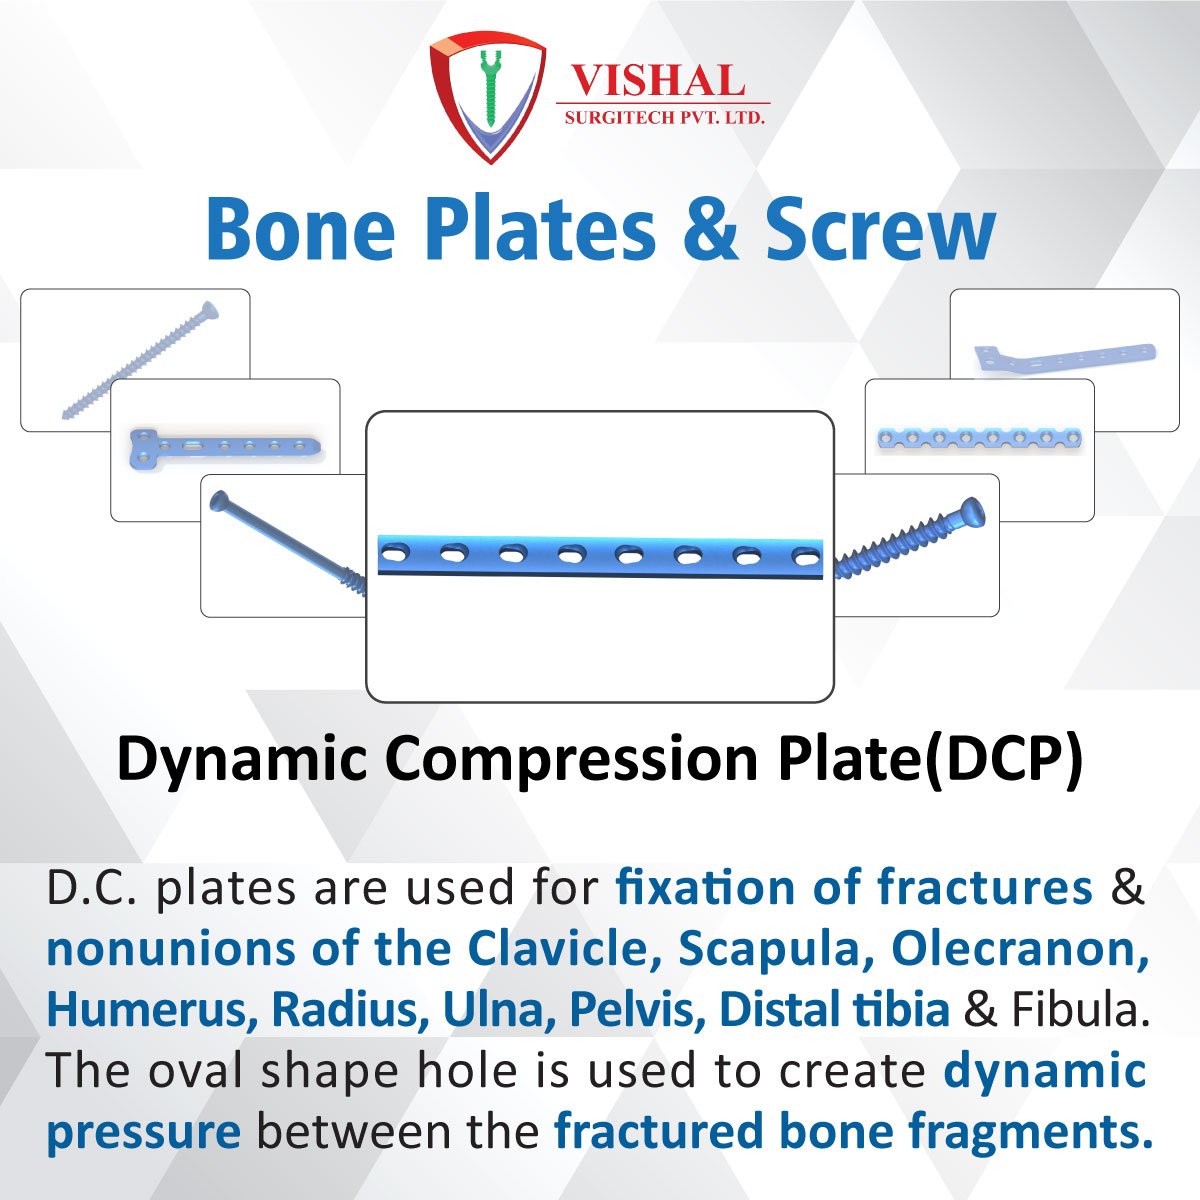 Vishal surgitech on X: Use of Dynamic Compression Plate (Bone Plates &  Screw) #VishalSurgitech #Surgical #Implants #DynamicCompressionPlate #DCP  #Usage  / X